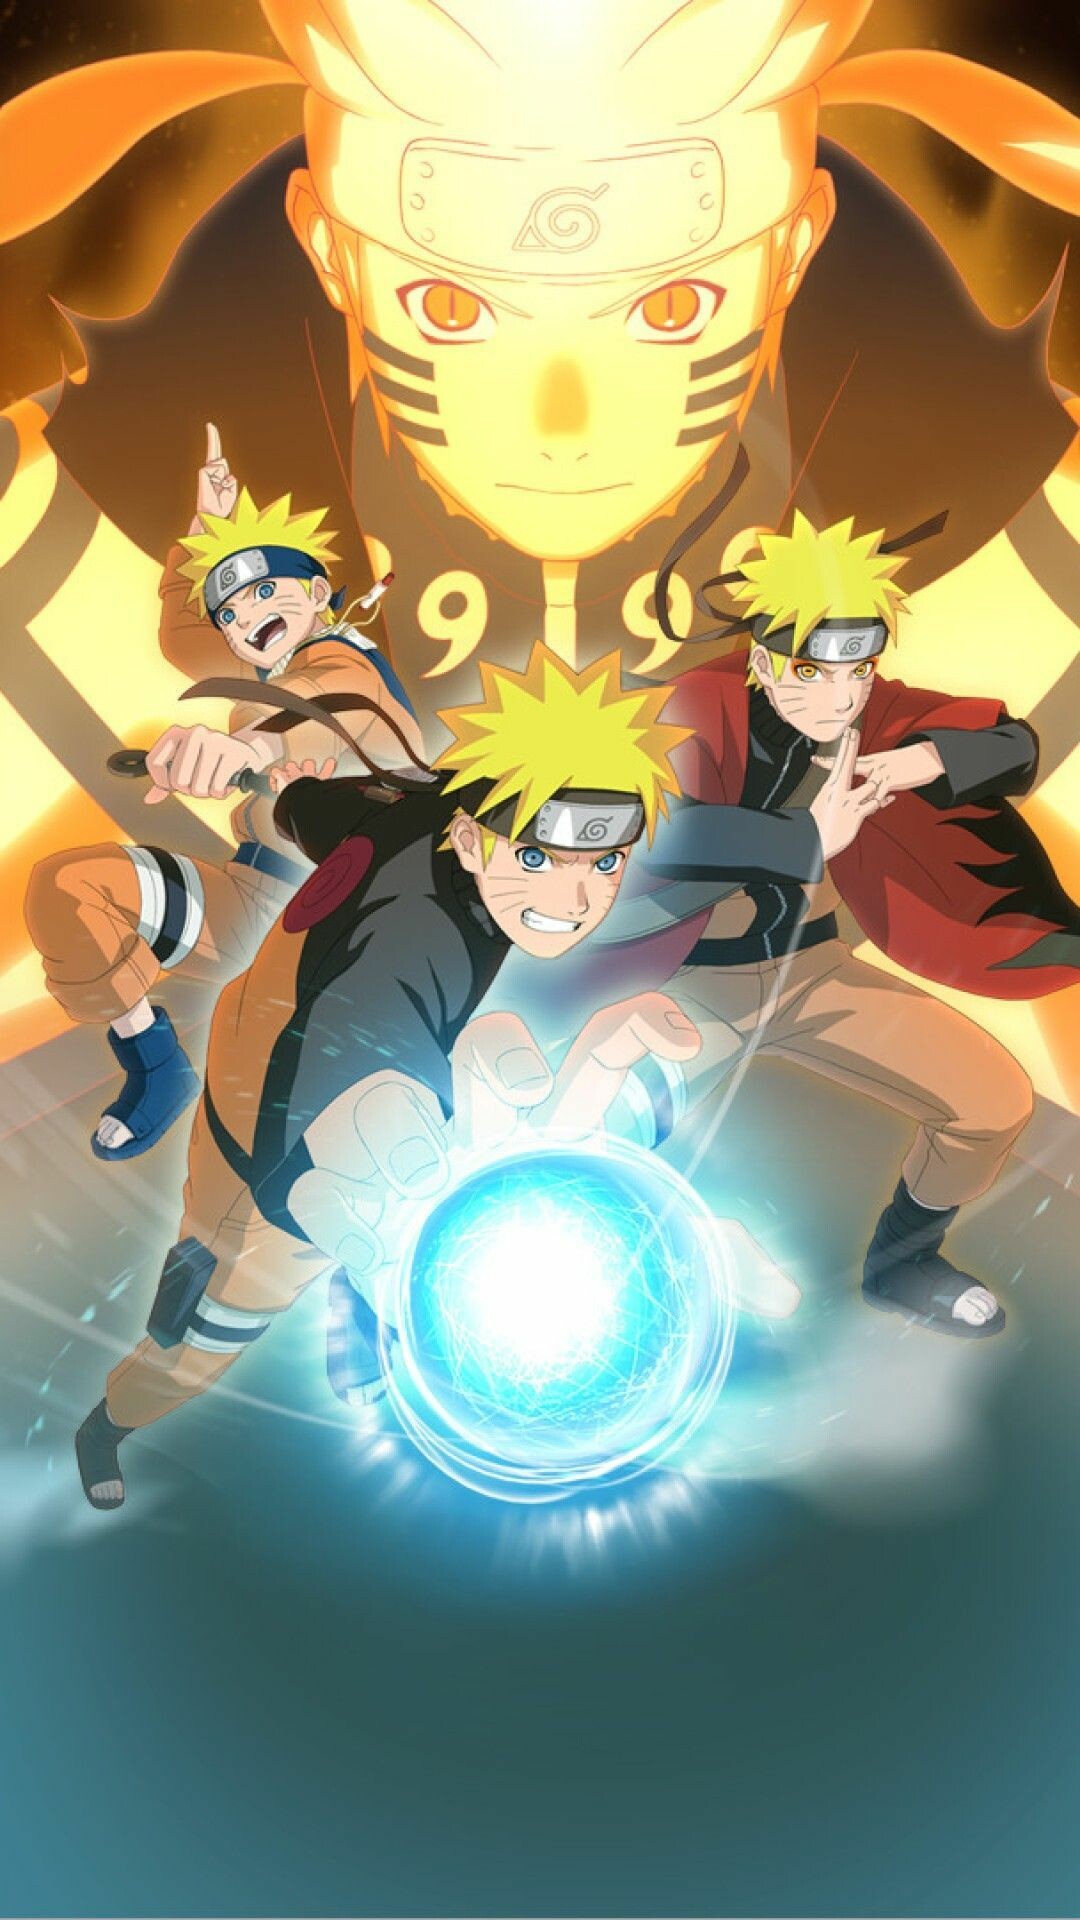 Naruto: Shippuden, An anime series mainly adapted from Part II of Masashi Kishimoto's original manga series, 500 episodes. 1080x1920 Full HD Wallpaper.